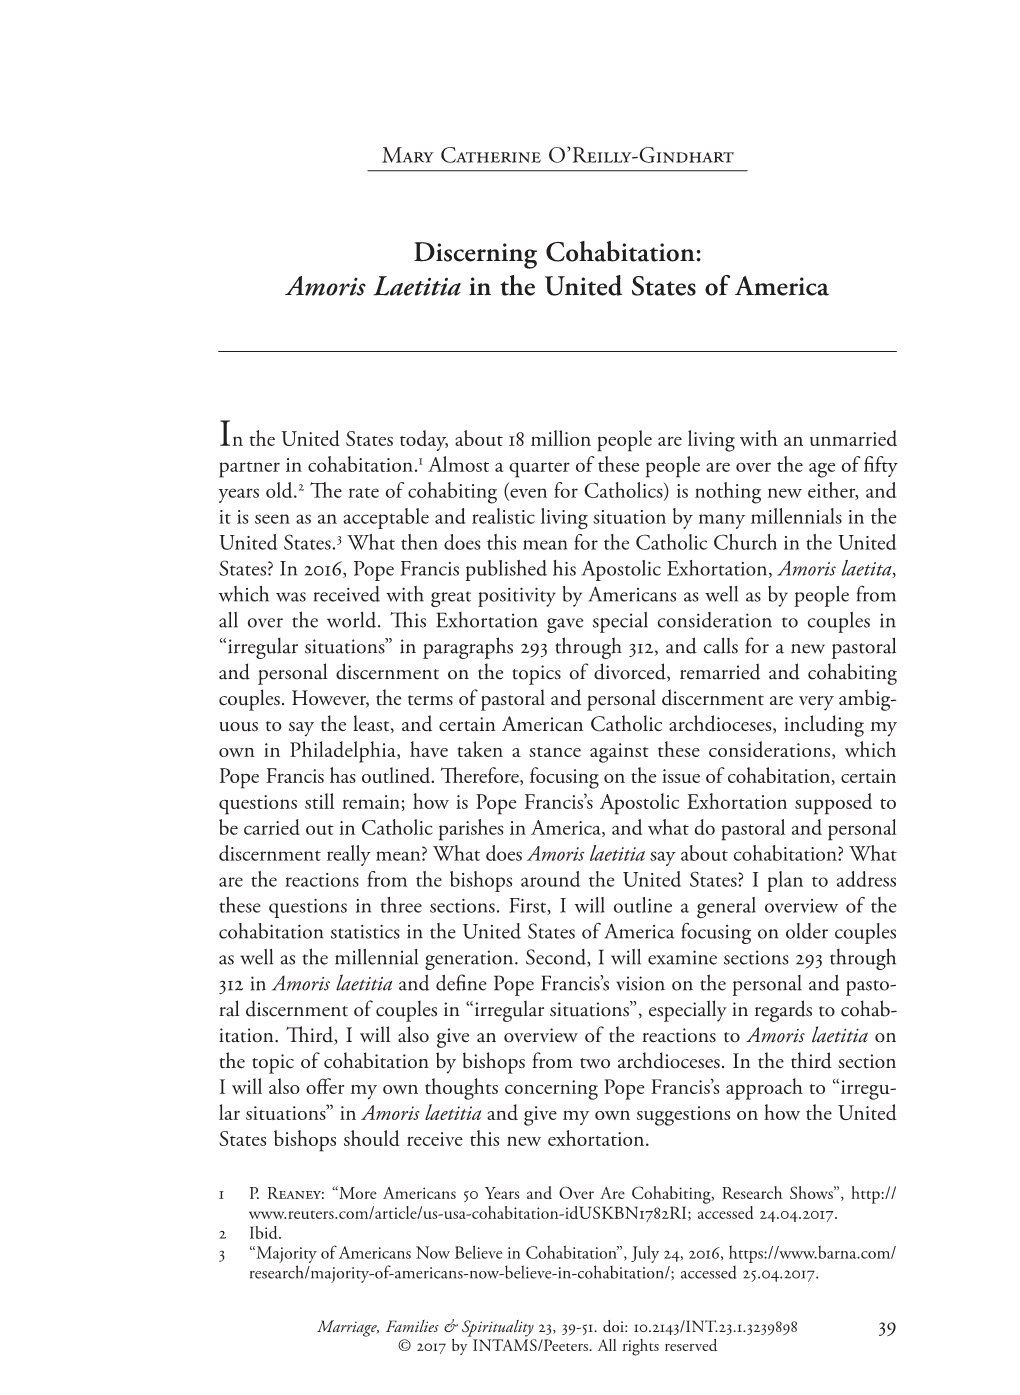 Discerning Cohabitation: Amoris Laetitia in the United States of America